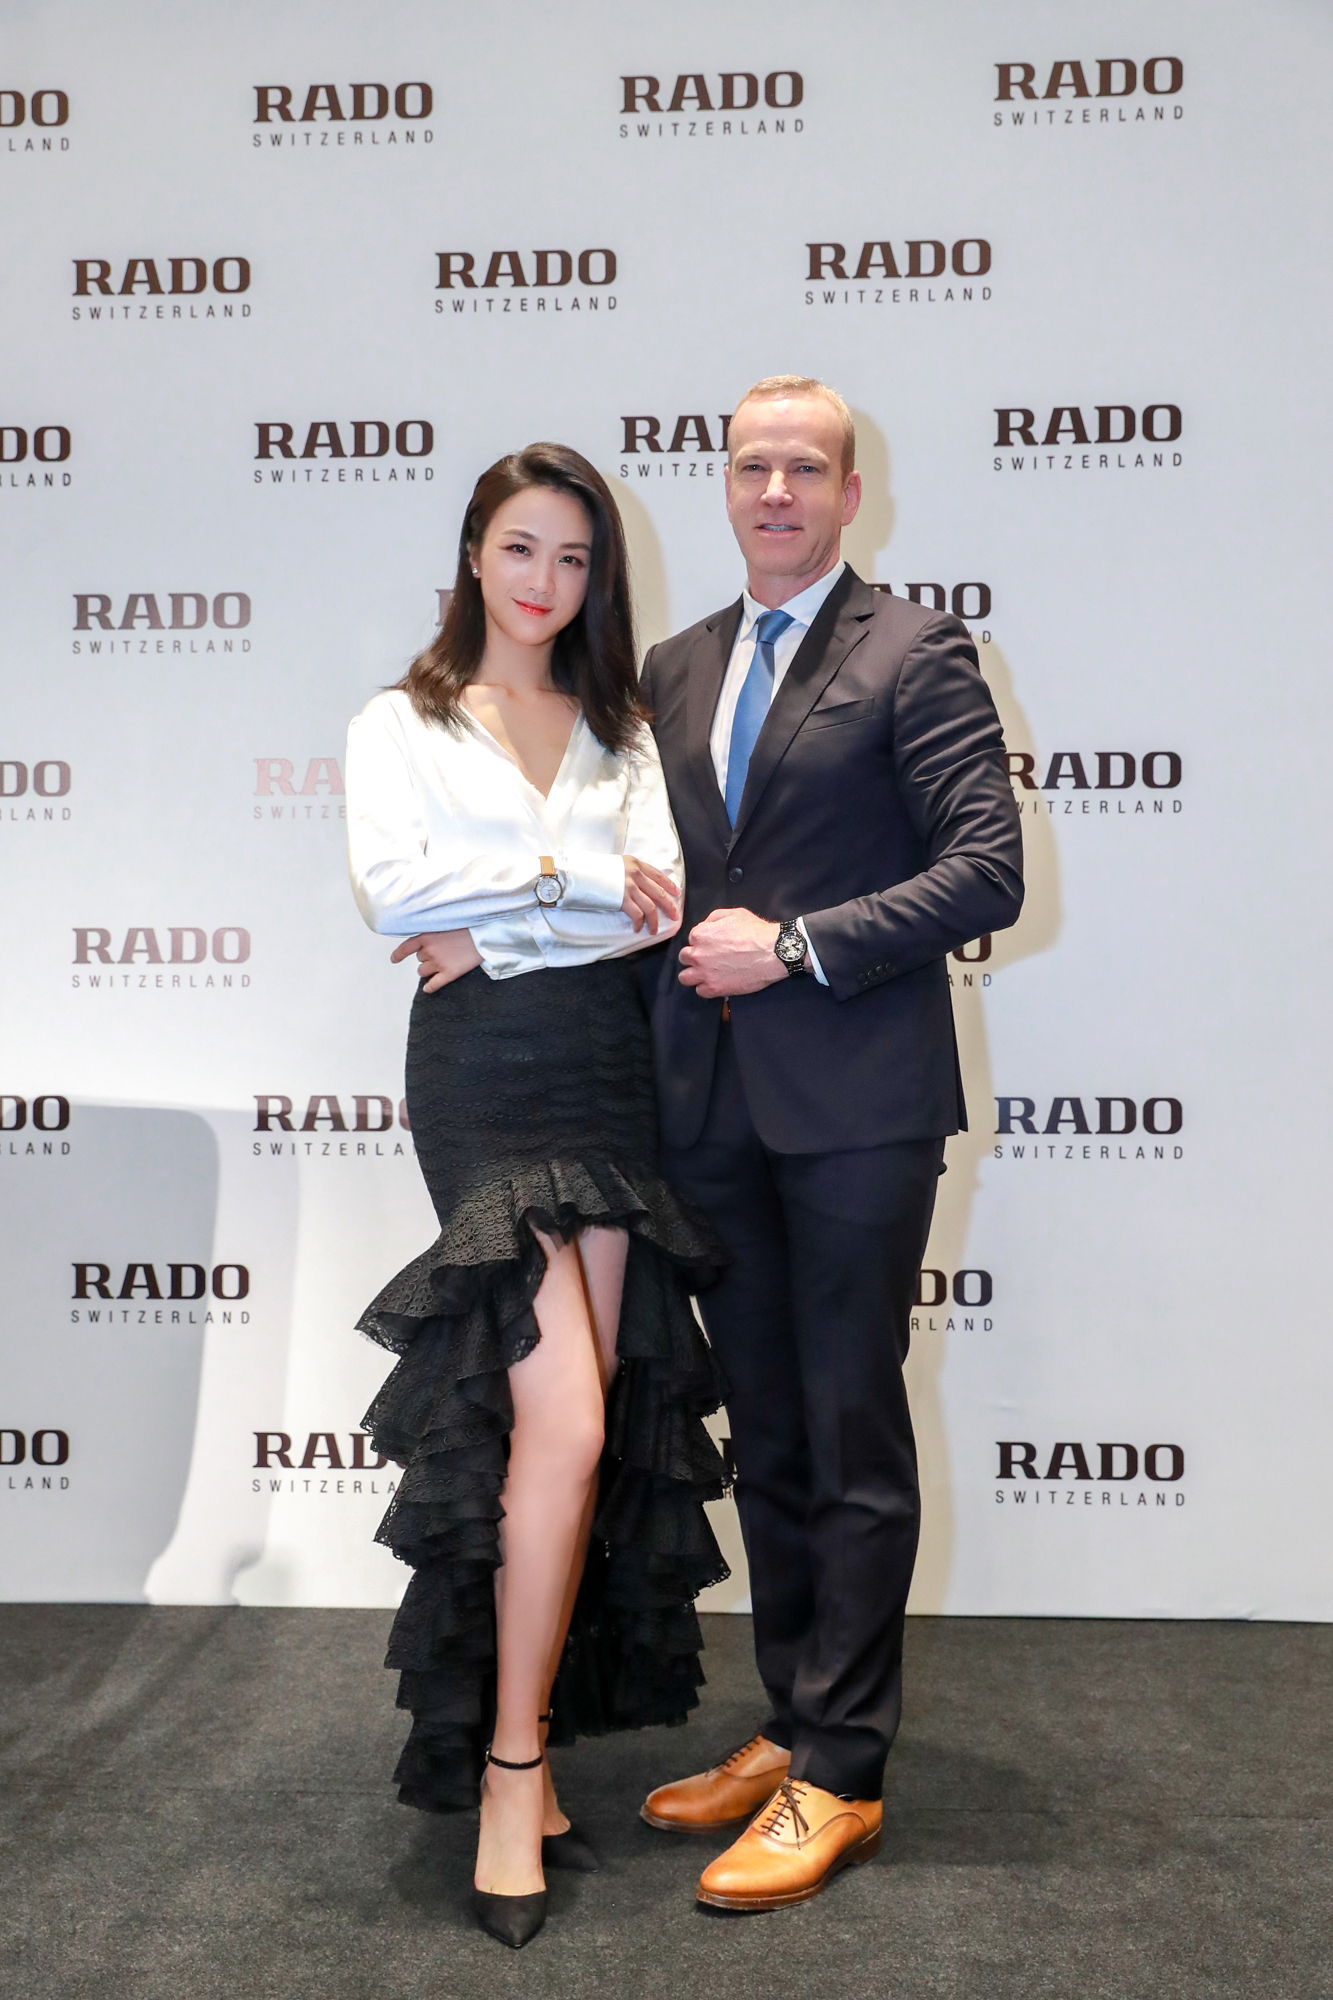 RADO瑞士雷达表携手全球品牌代言人汤唯共臻新品盛大发布